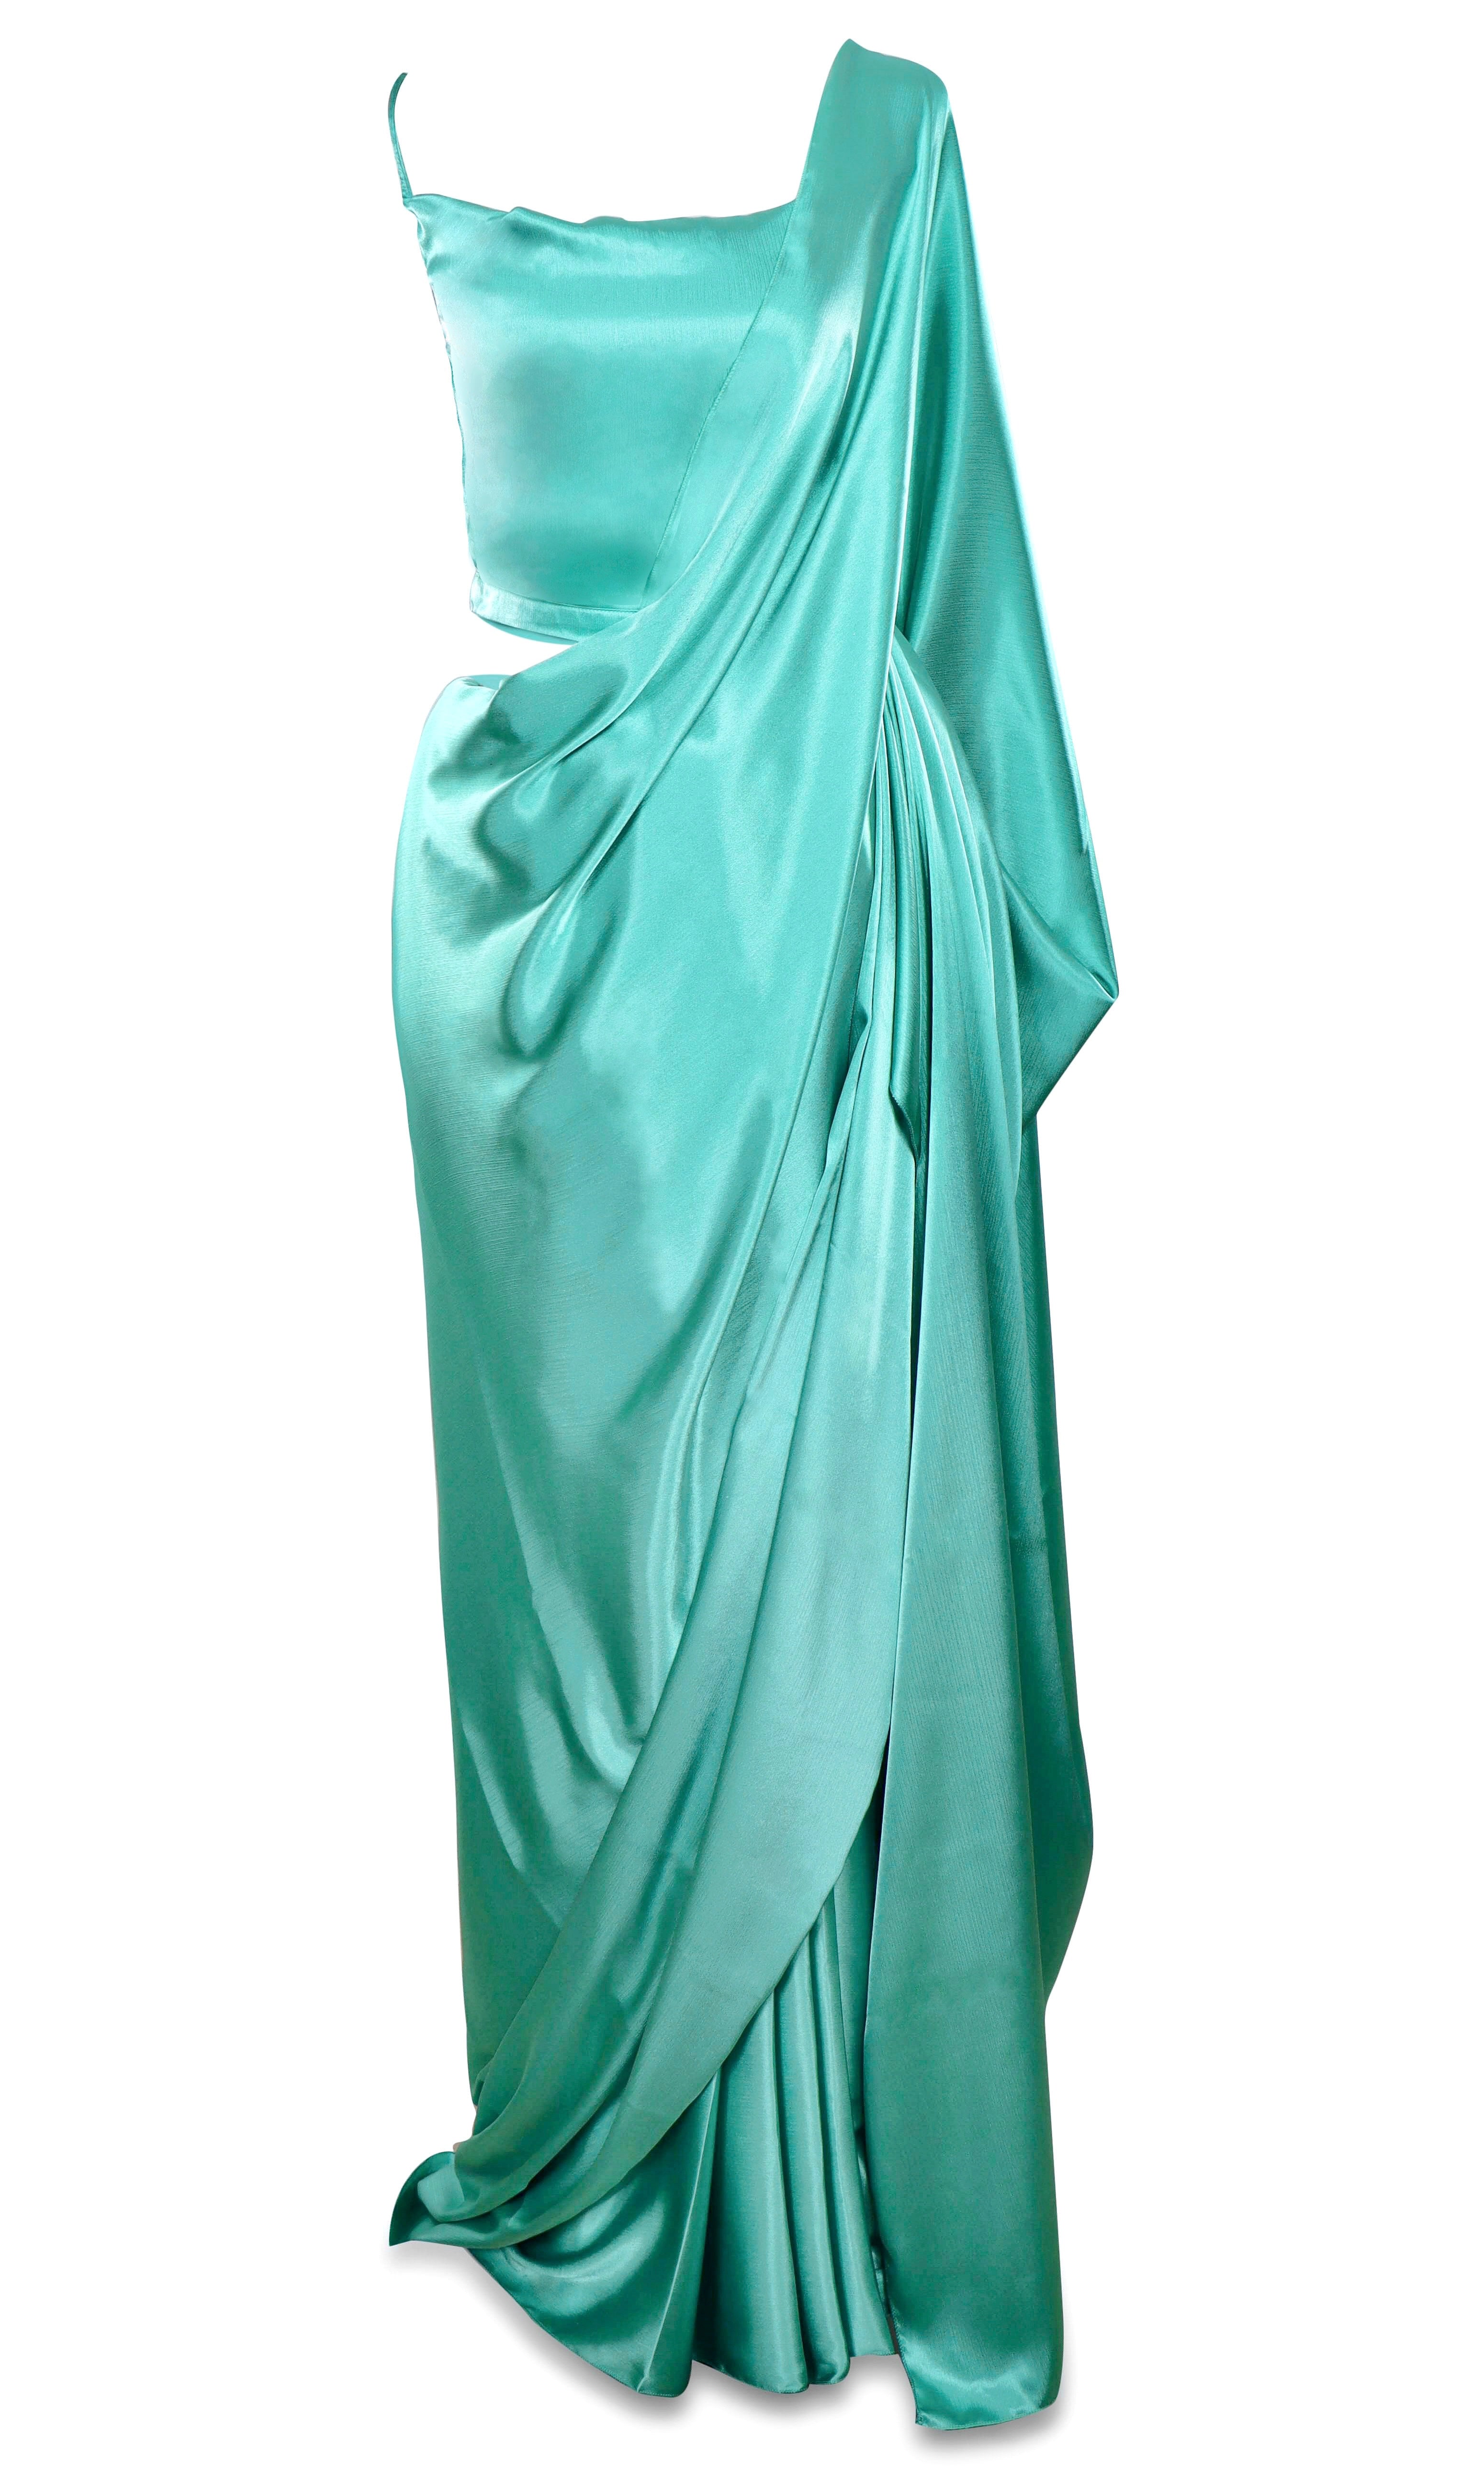 Pre-stitched, pre-pleated aqua blue silk saree comes with a Matching petticoat